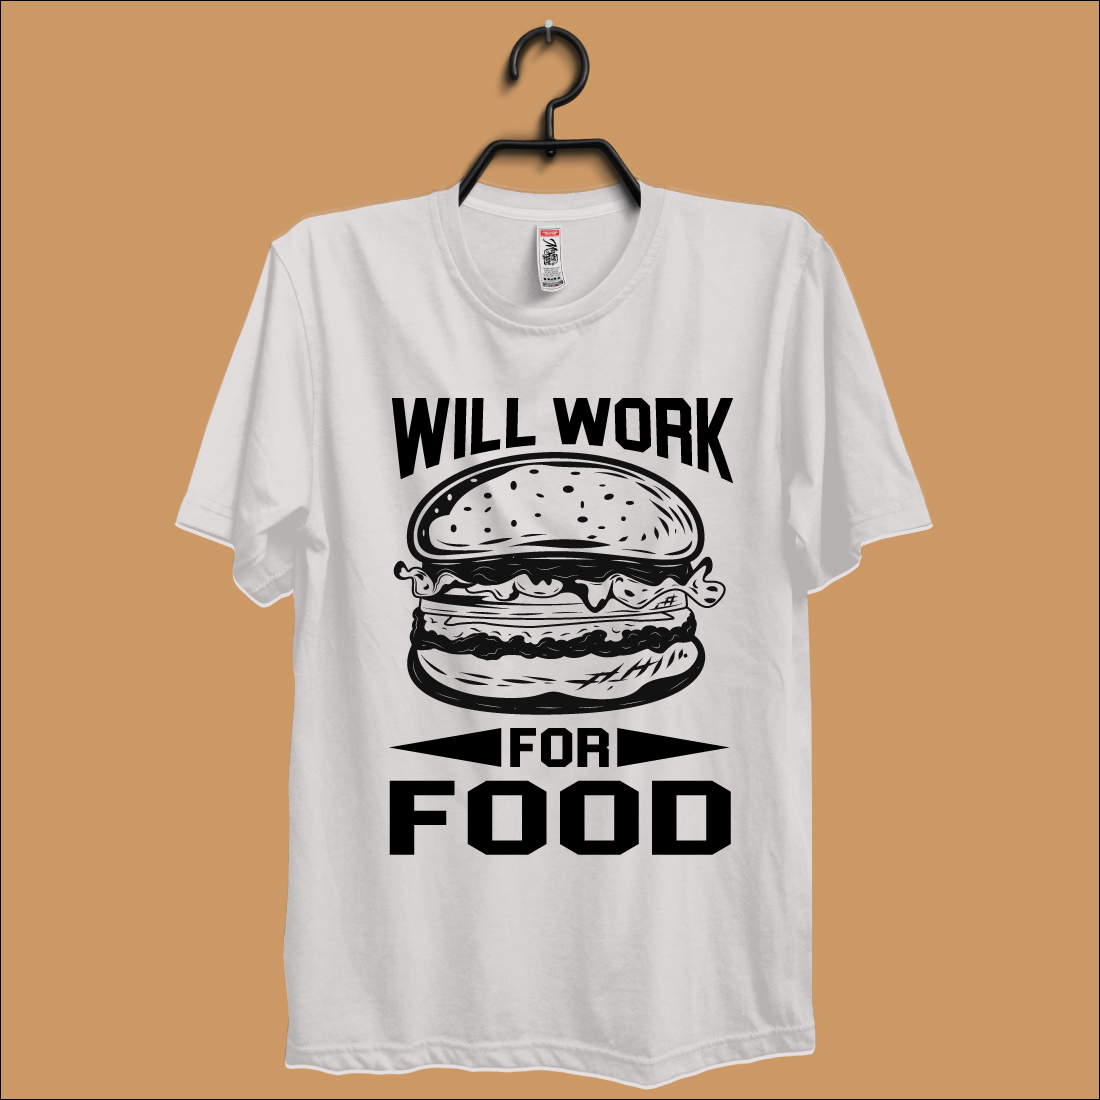 food t shirt design02 803